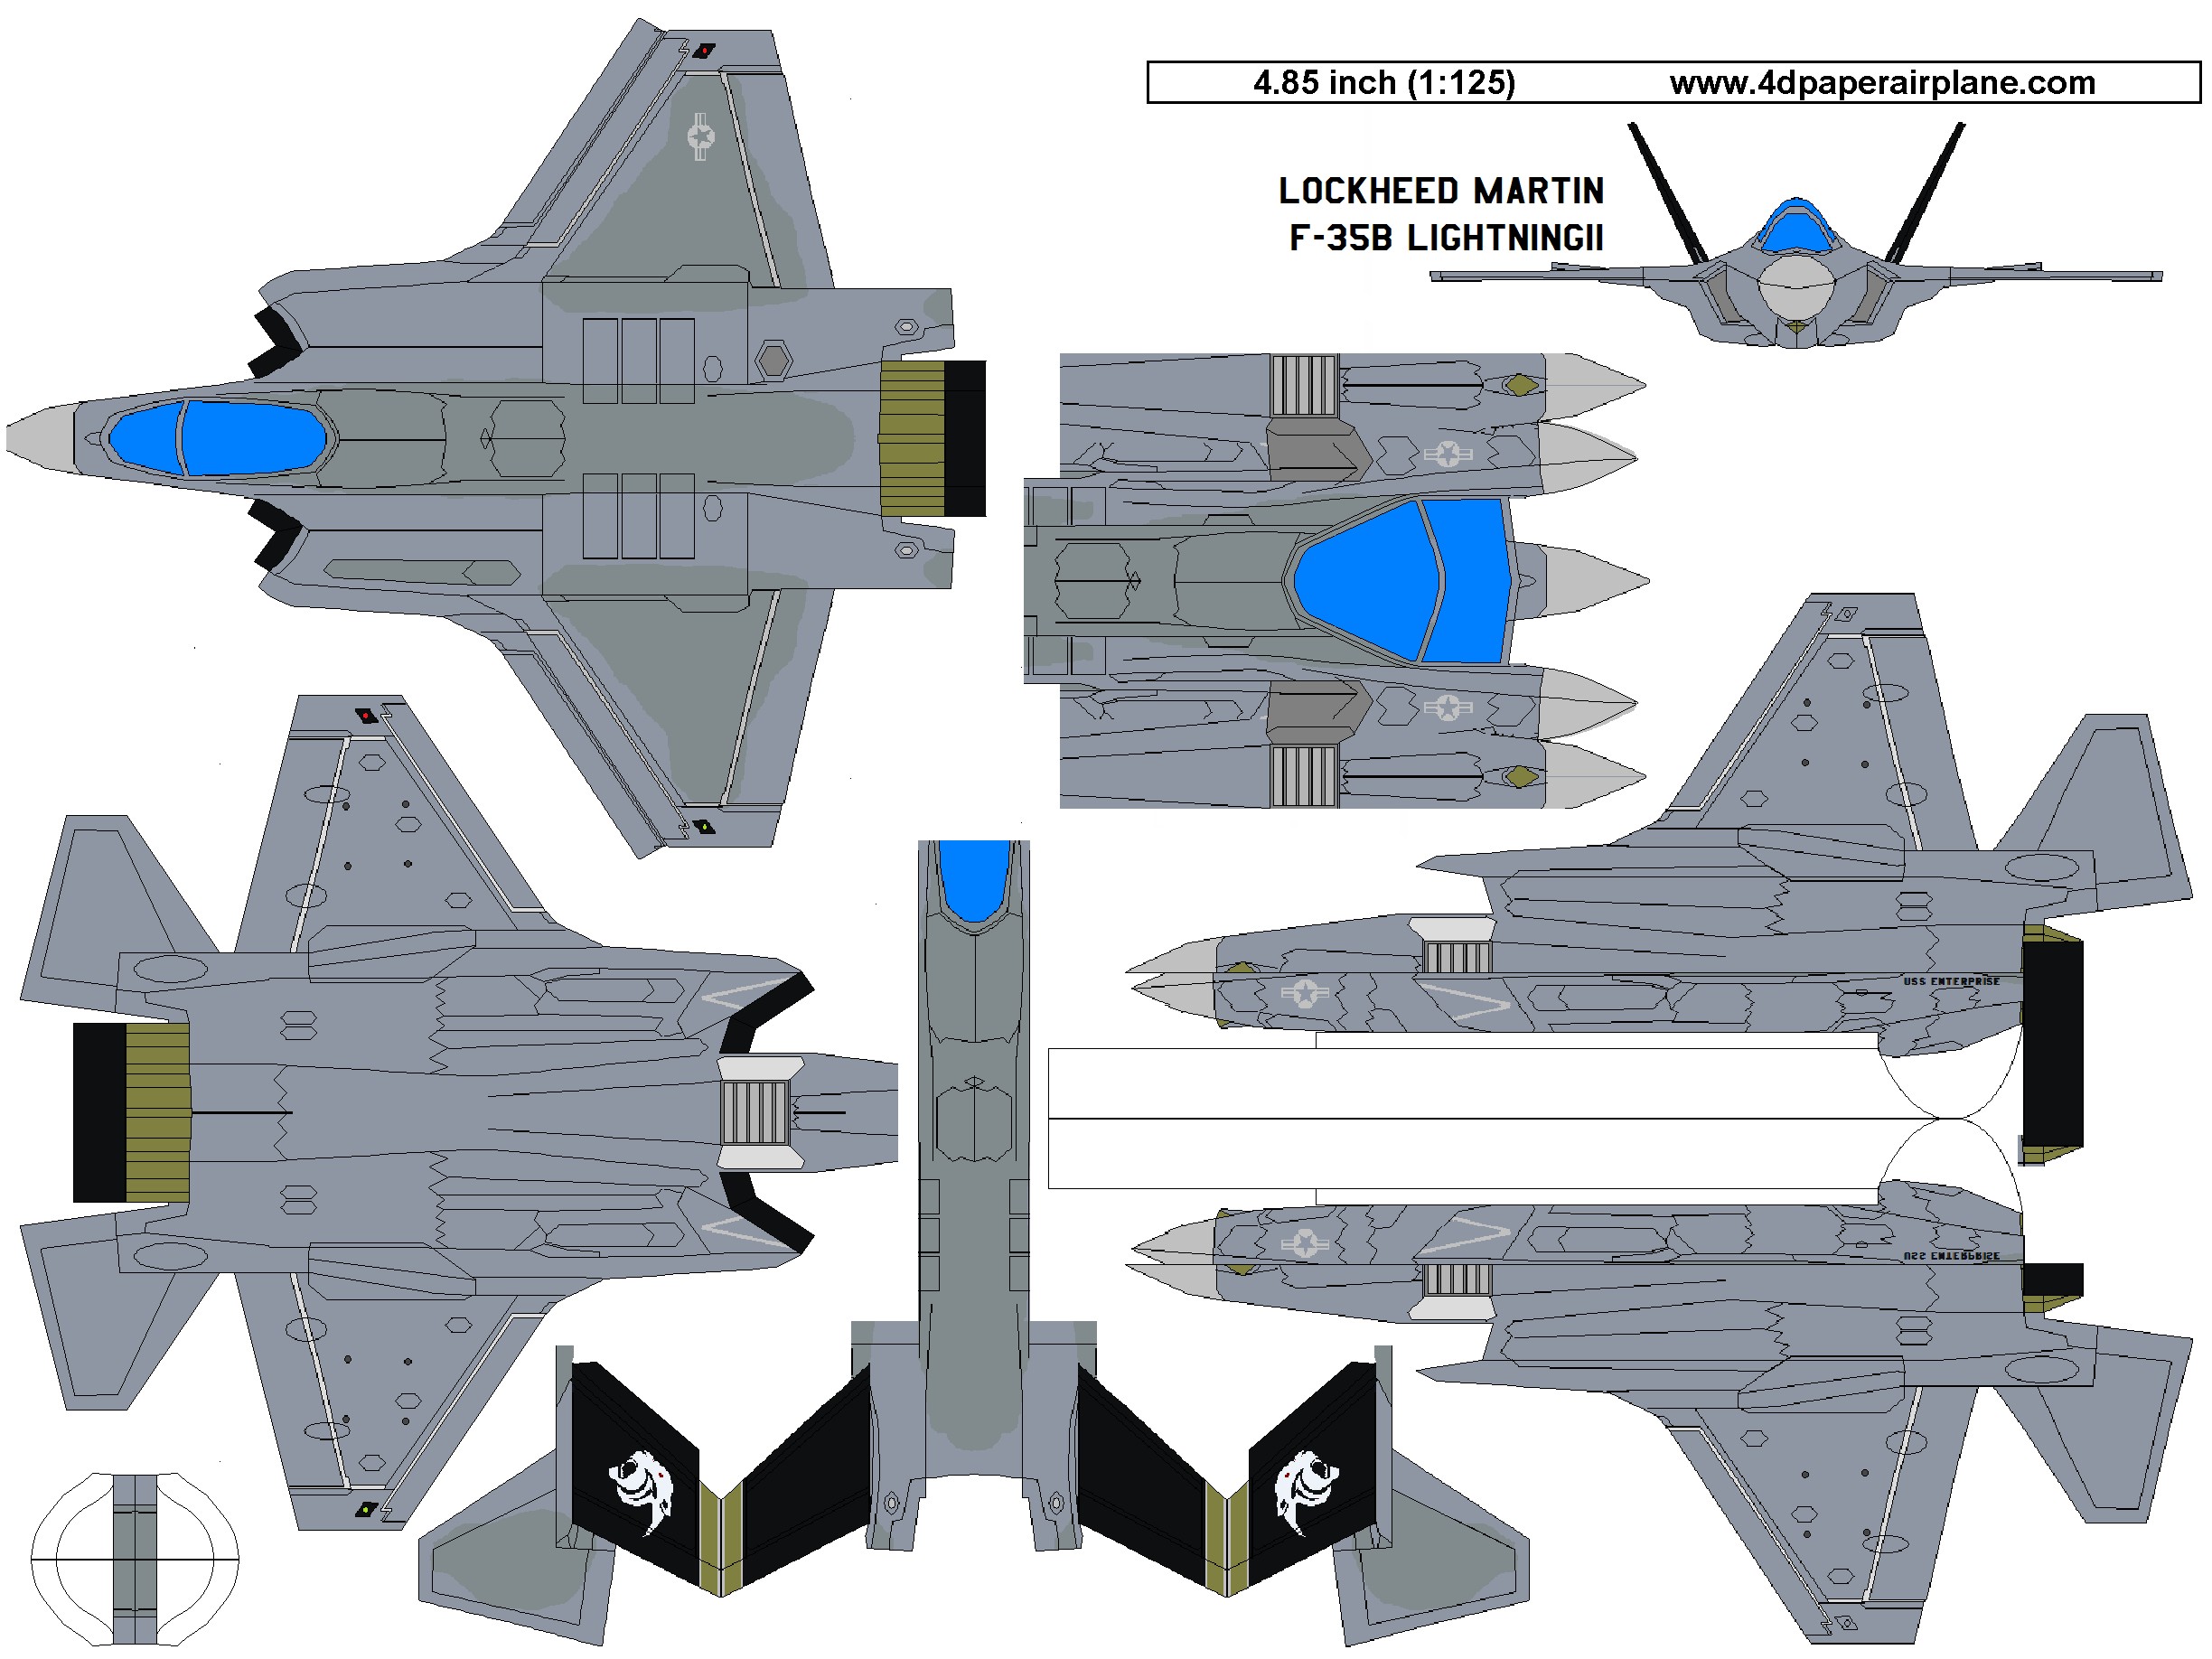 A template of 4D model Lockheed Martin F 35B Lightning 4dpa